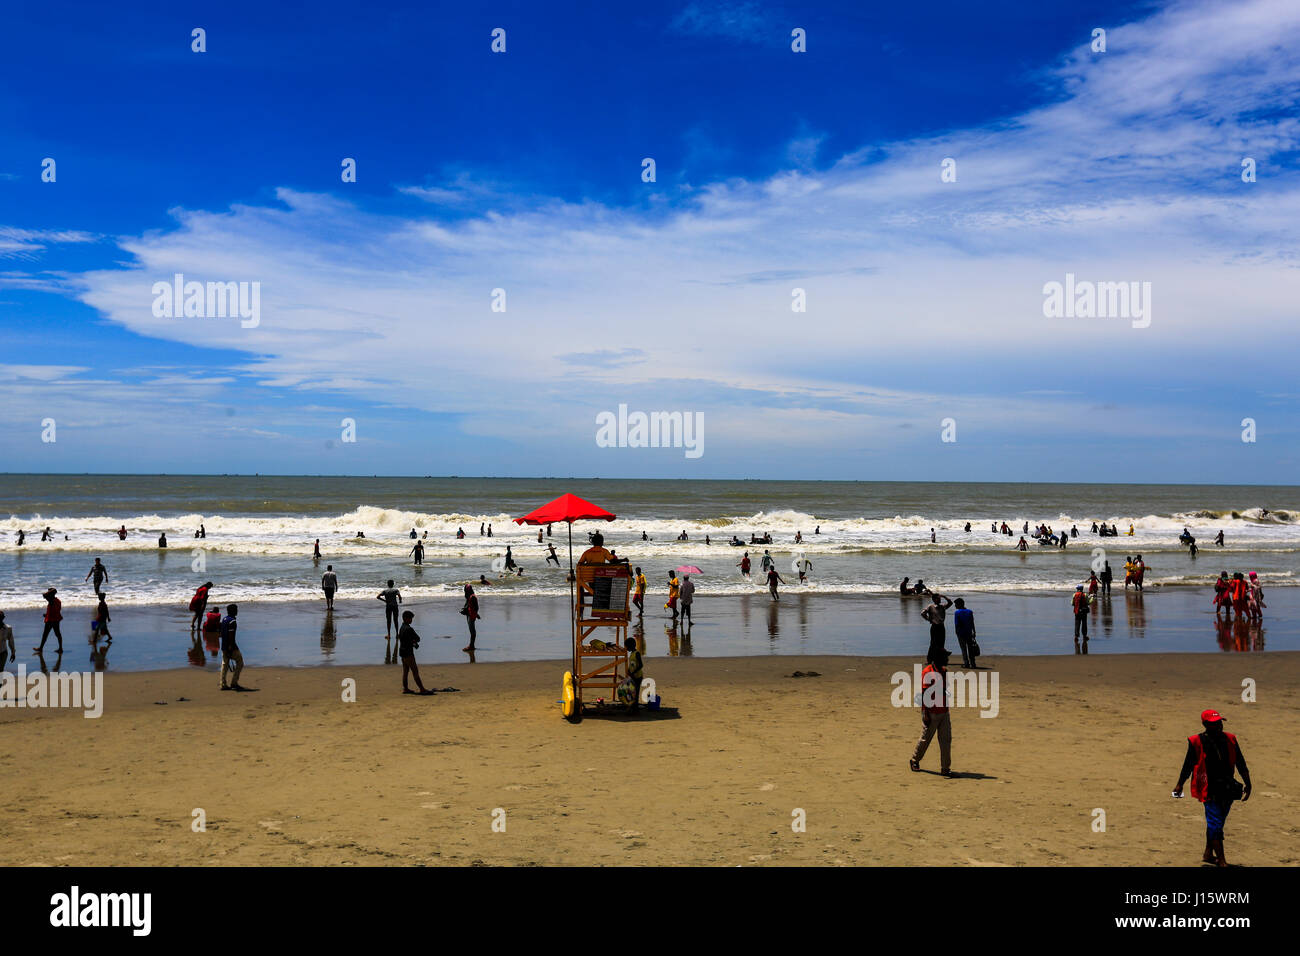 View Of The Cox S Bazar Sea Beach The Longest Sea Beach In The World Cox S Bazar Bangladesh